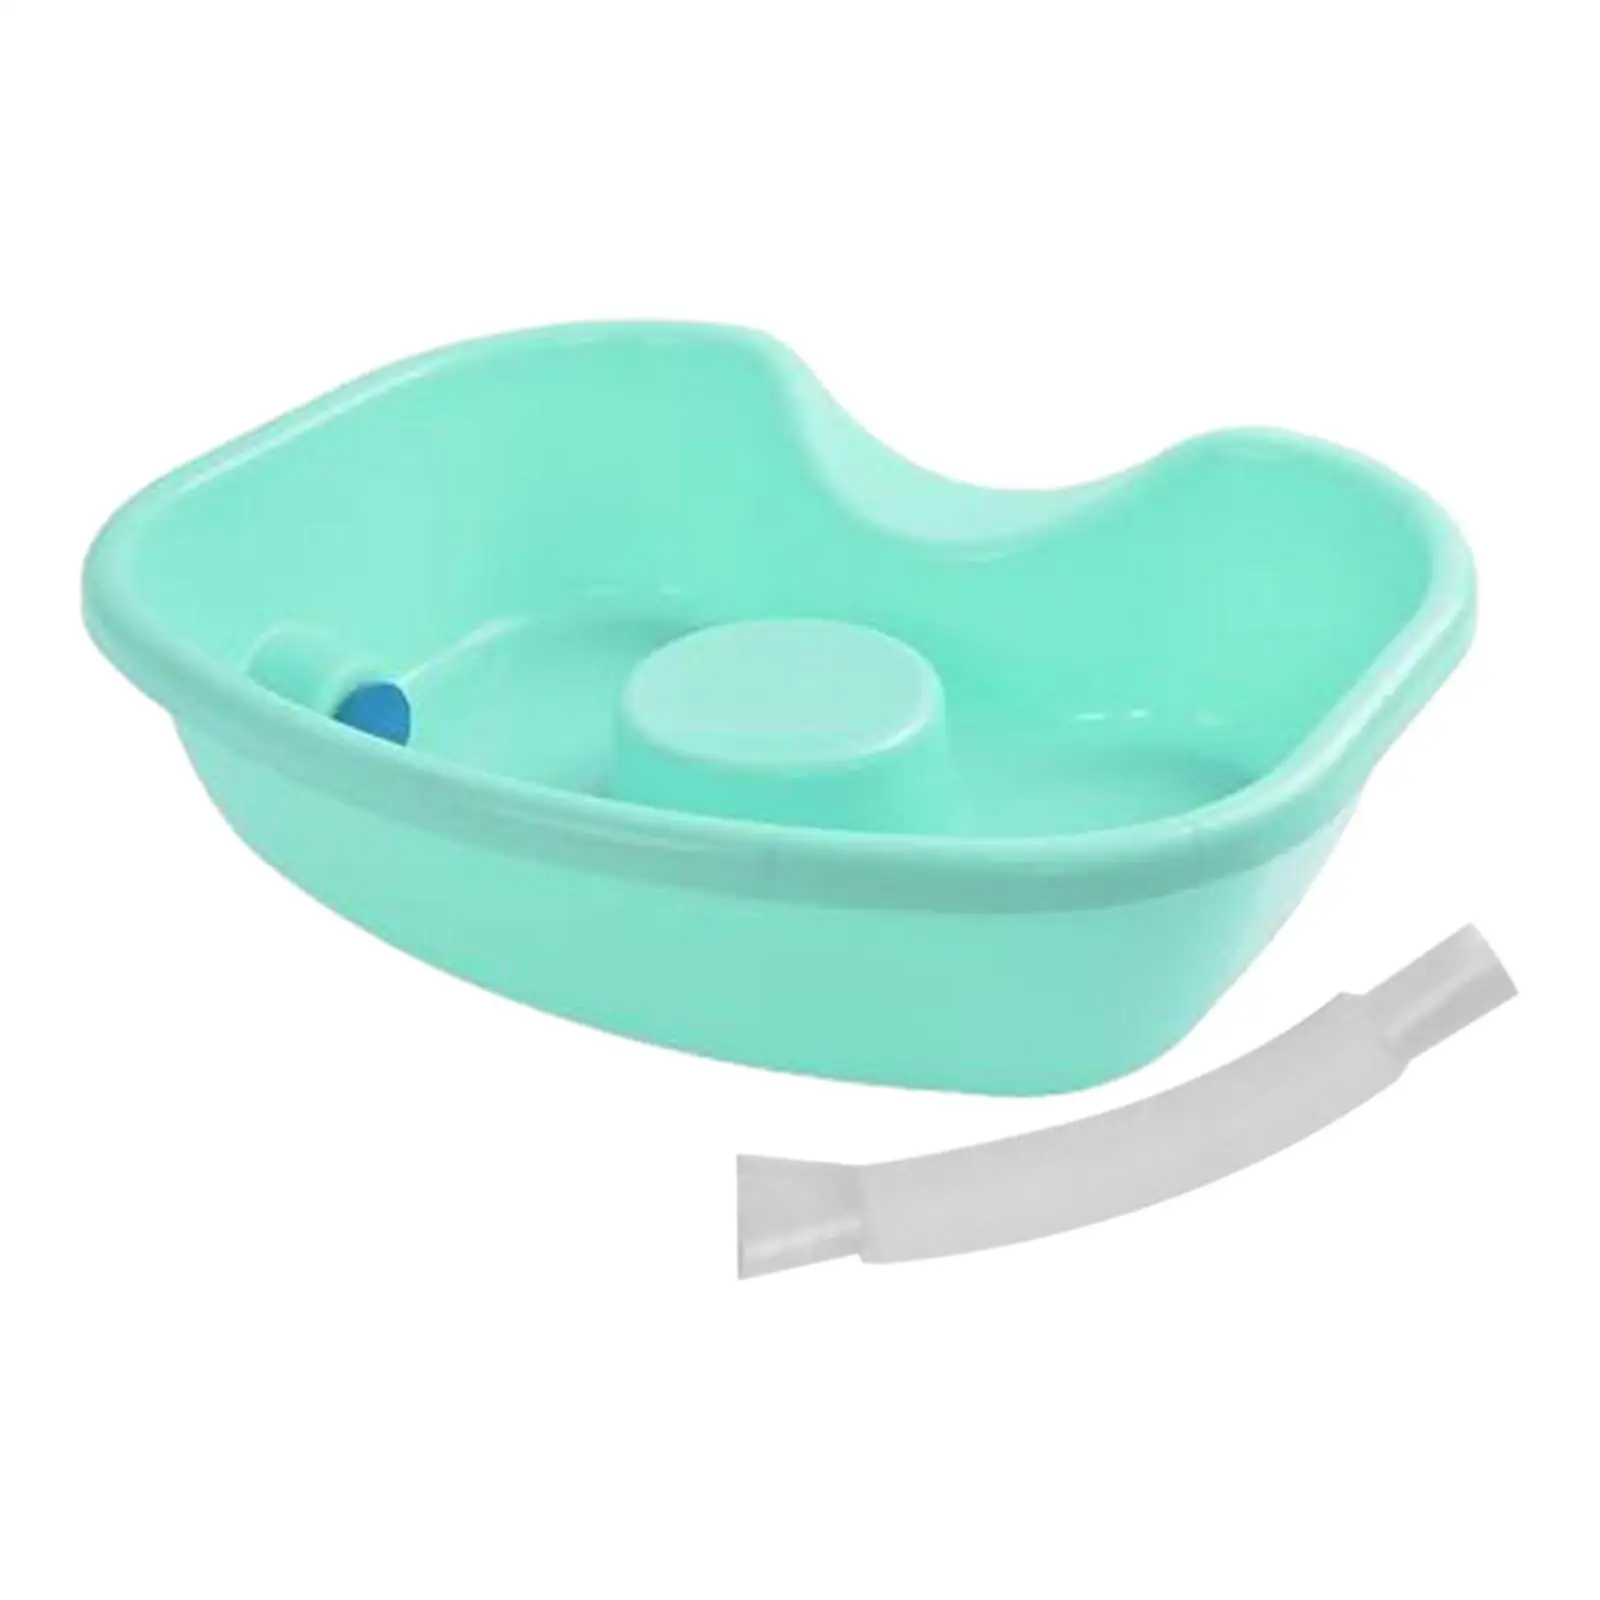 Shampoo Bowl Lightweight Bathroom Accessories Hair Wash Tub Hair Washing Basin for Home Bedside Bedridden Handicapped Seniors